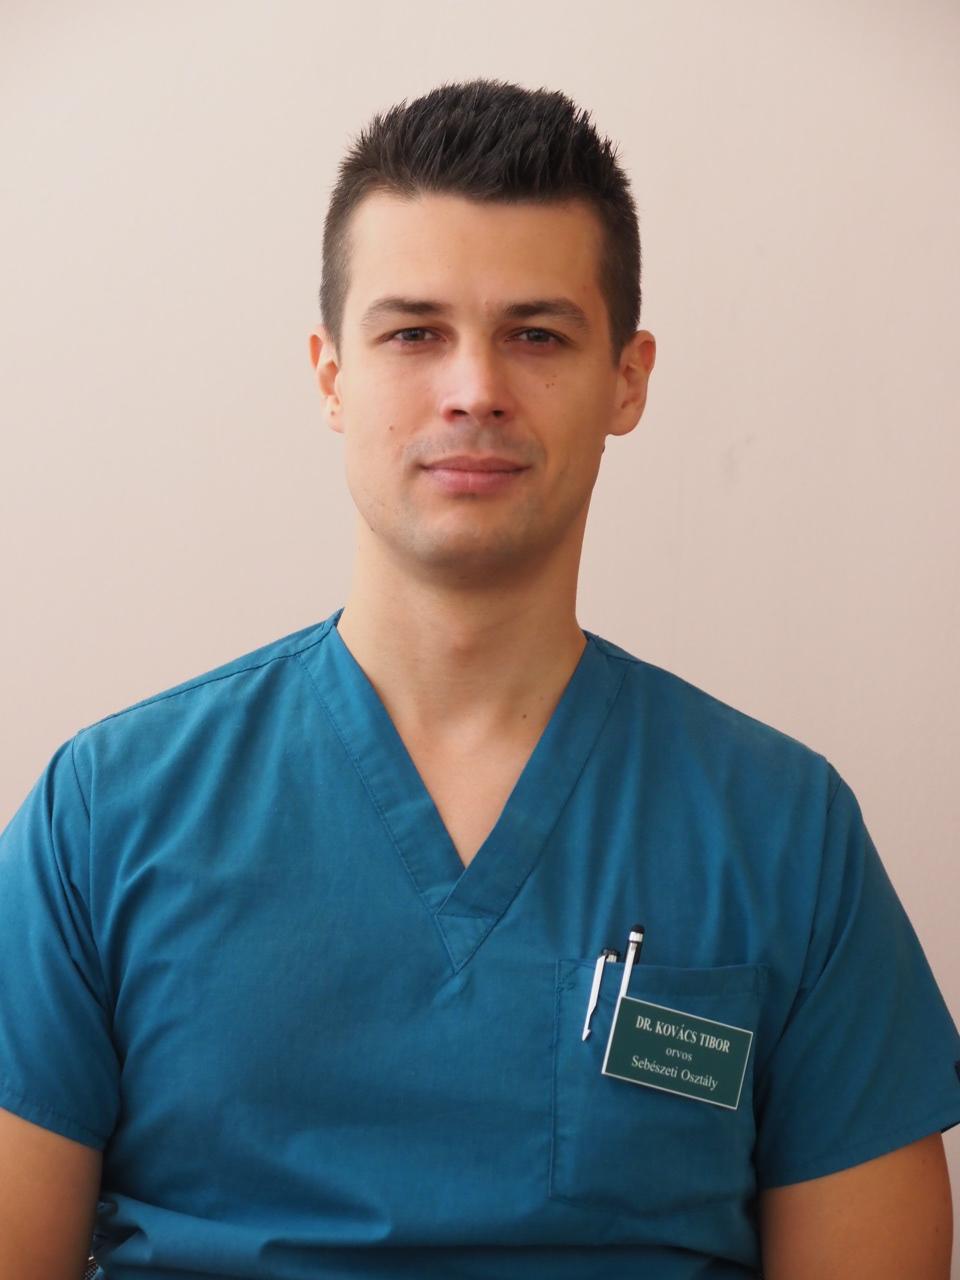 Dr. Kovács Tibor